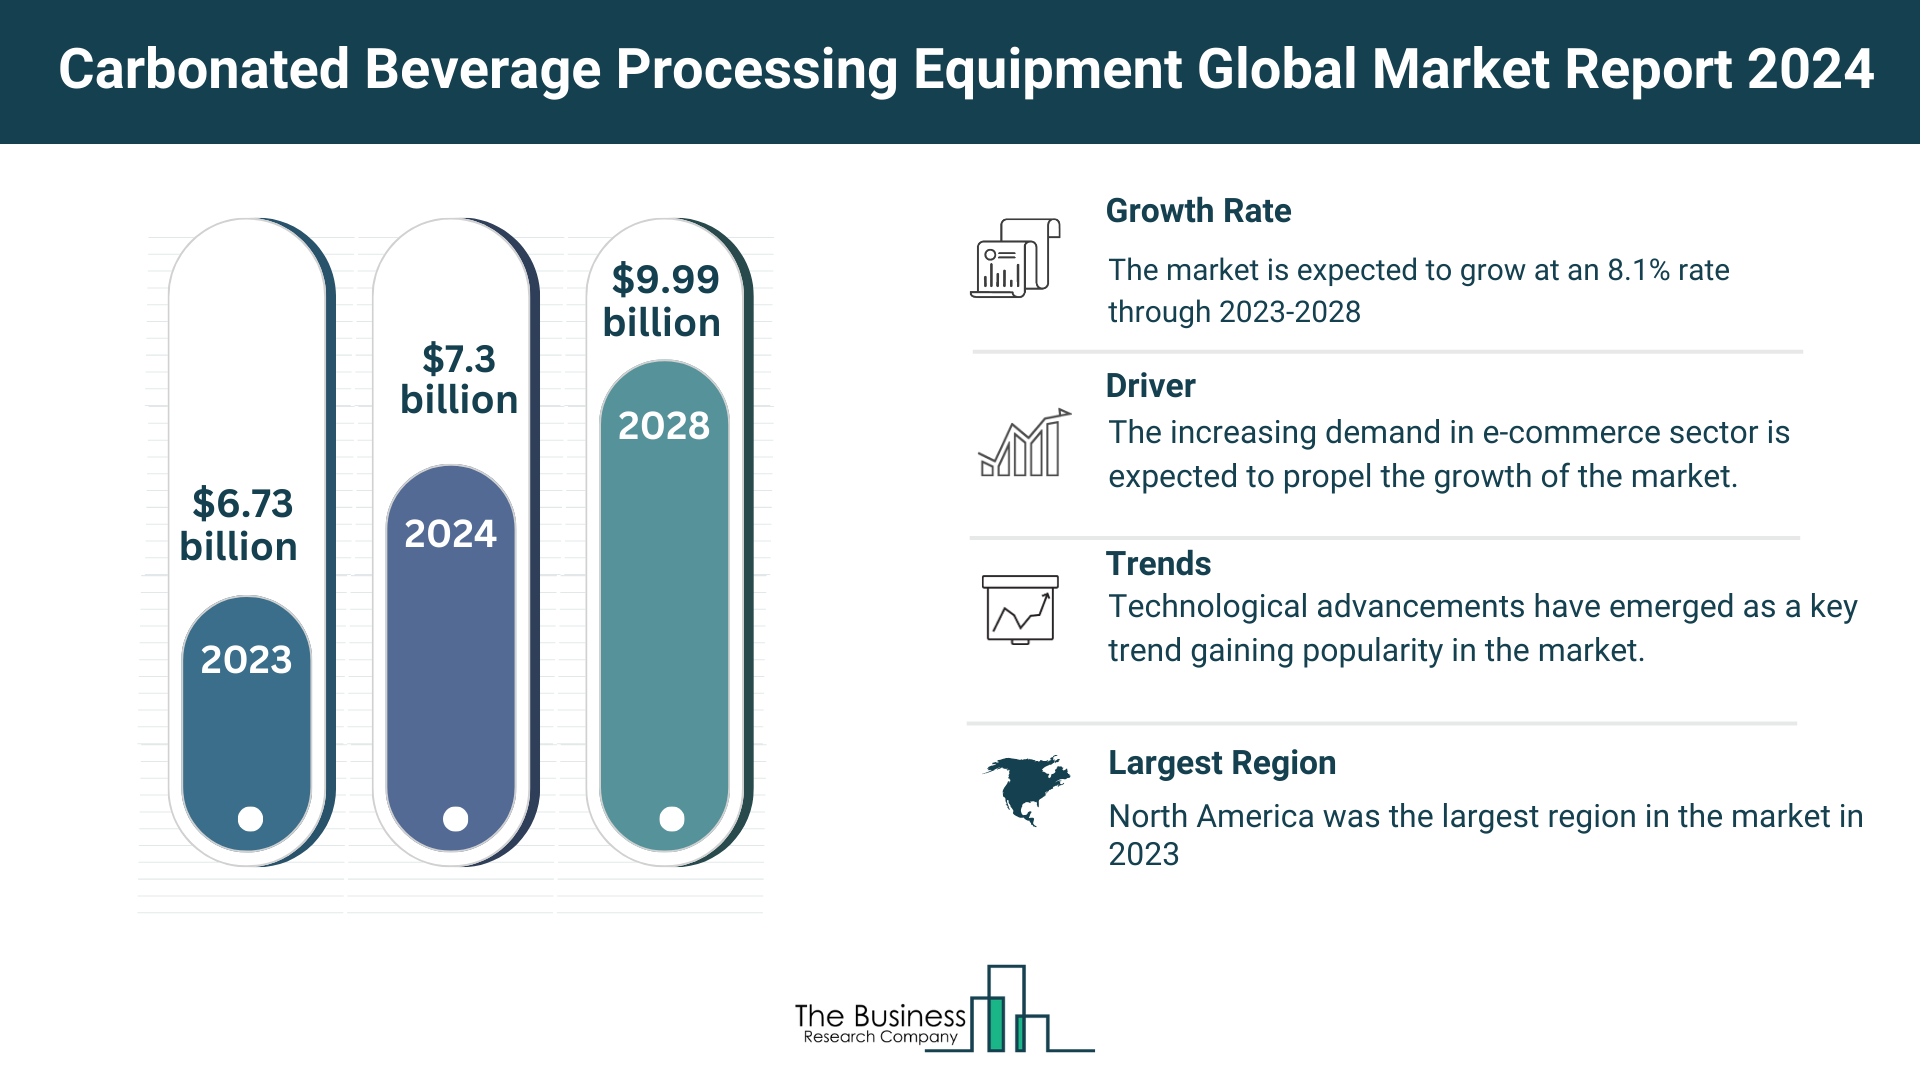 Global Carbonated Beverage Processing Equipment Market